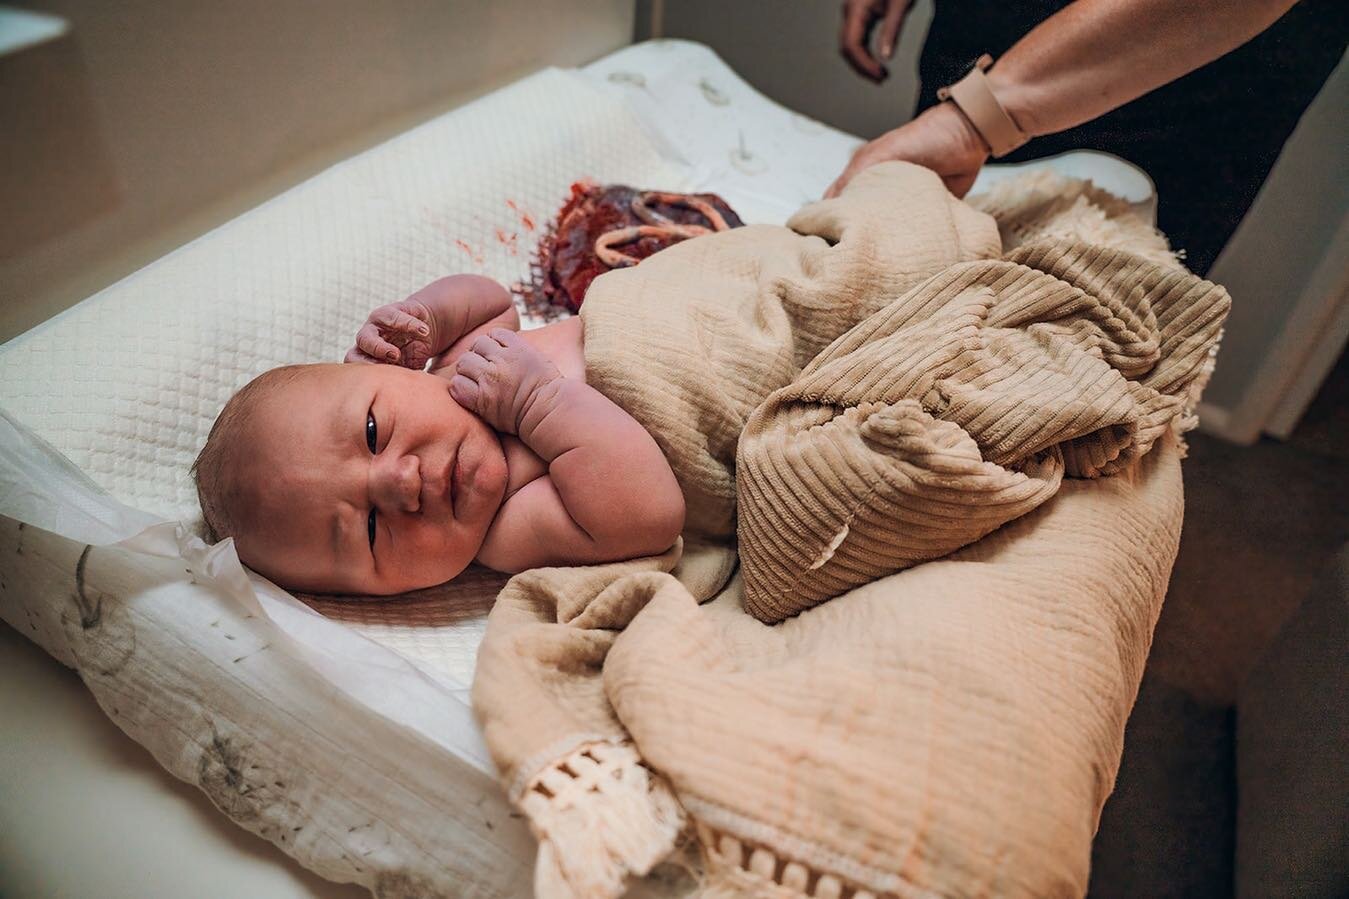 Ohhh that precious look, while still attached to her cord. ❤️ 

📸 @mysacredbirth 
.
.
.
.
.
.
#homebirth #homebirthbaby #homebirthing #homebirthingmama #delayedcordclamping #newborn #newbornbaby #birthphotography #birthphotographer #toowoombabirthph